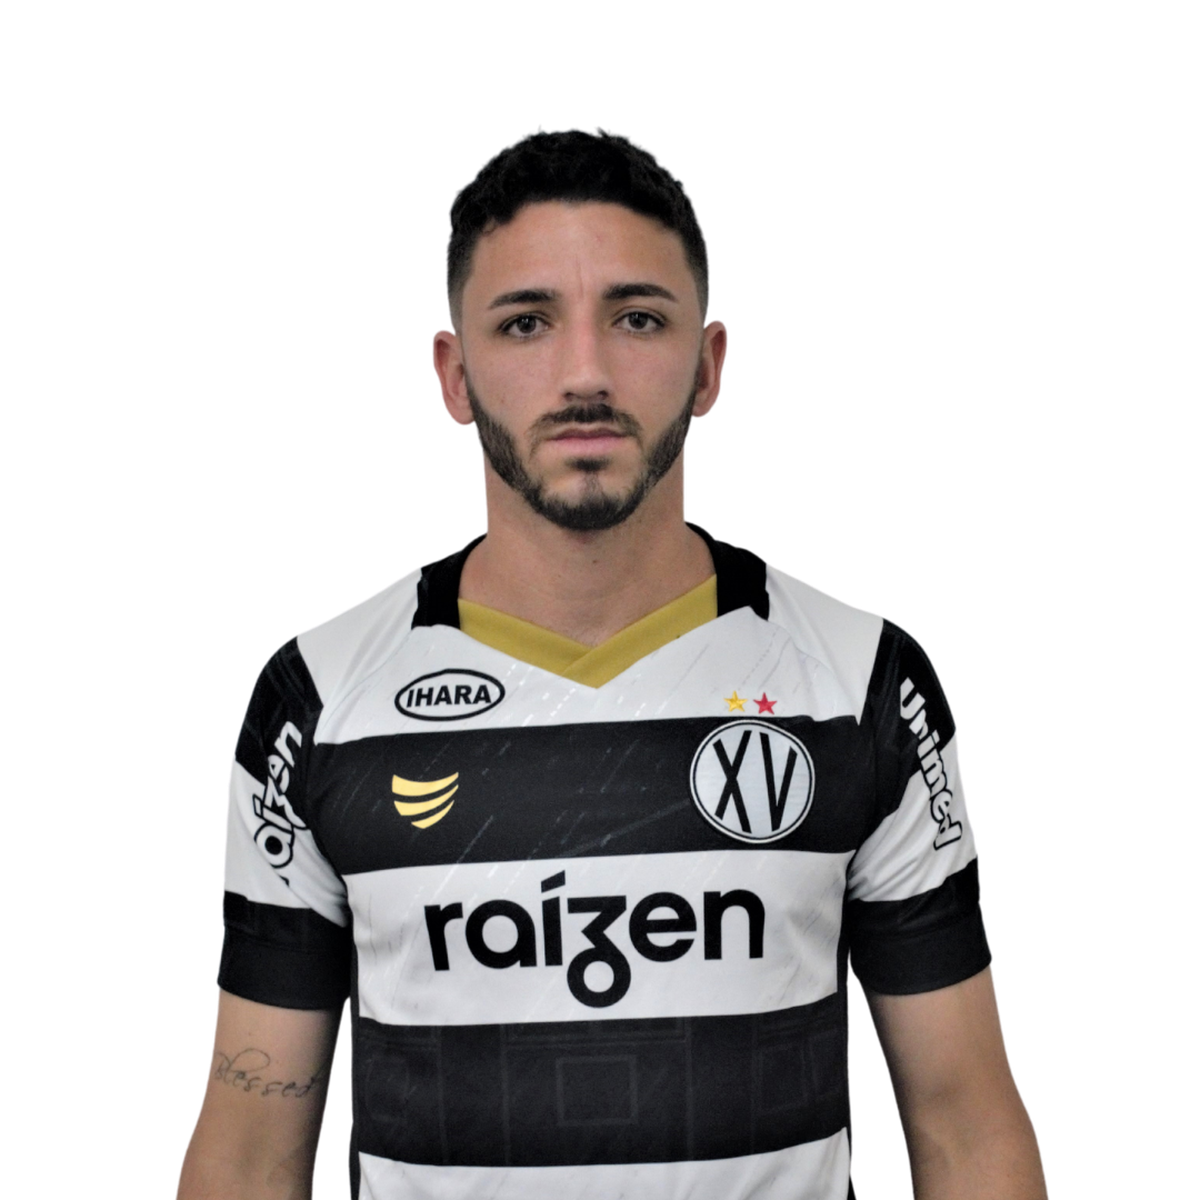 Lucas Cardoso :: Grêmio Prudente :: Player Profile 